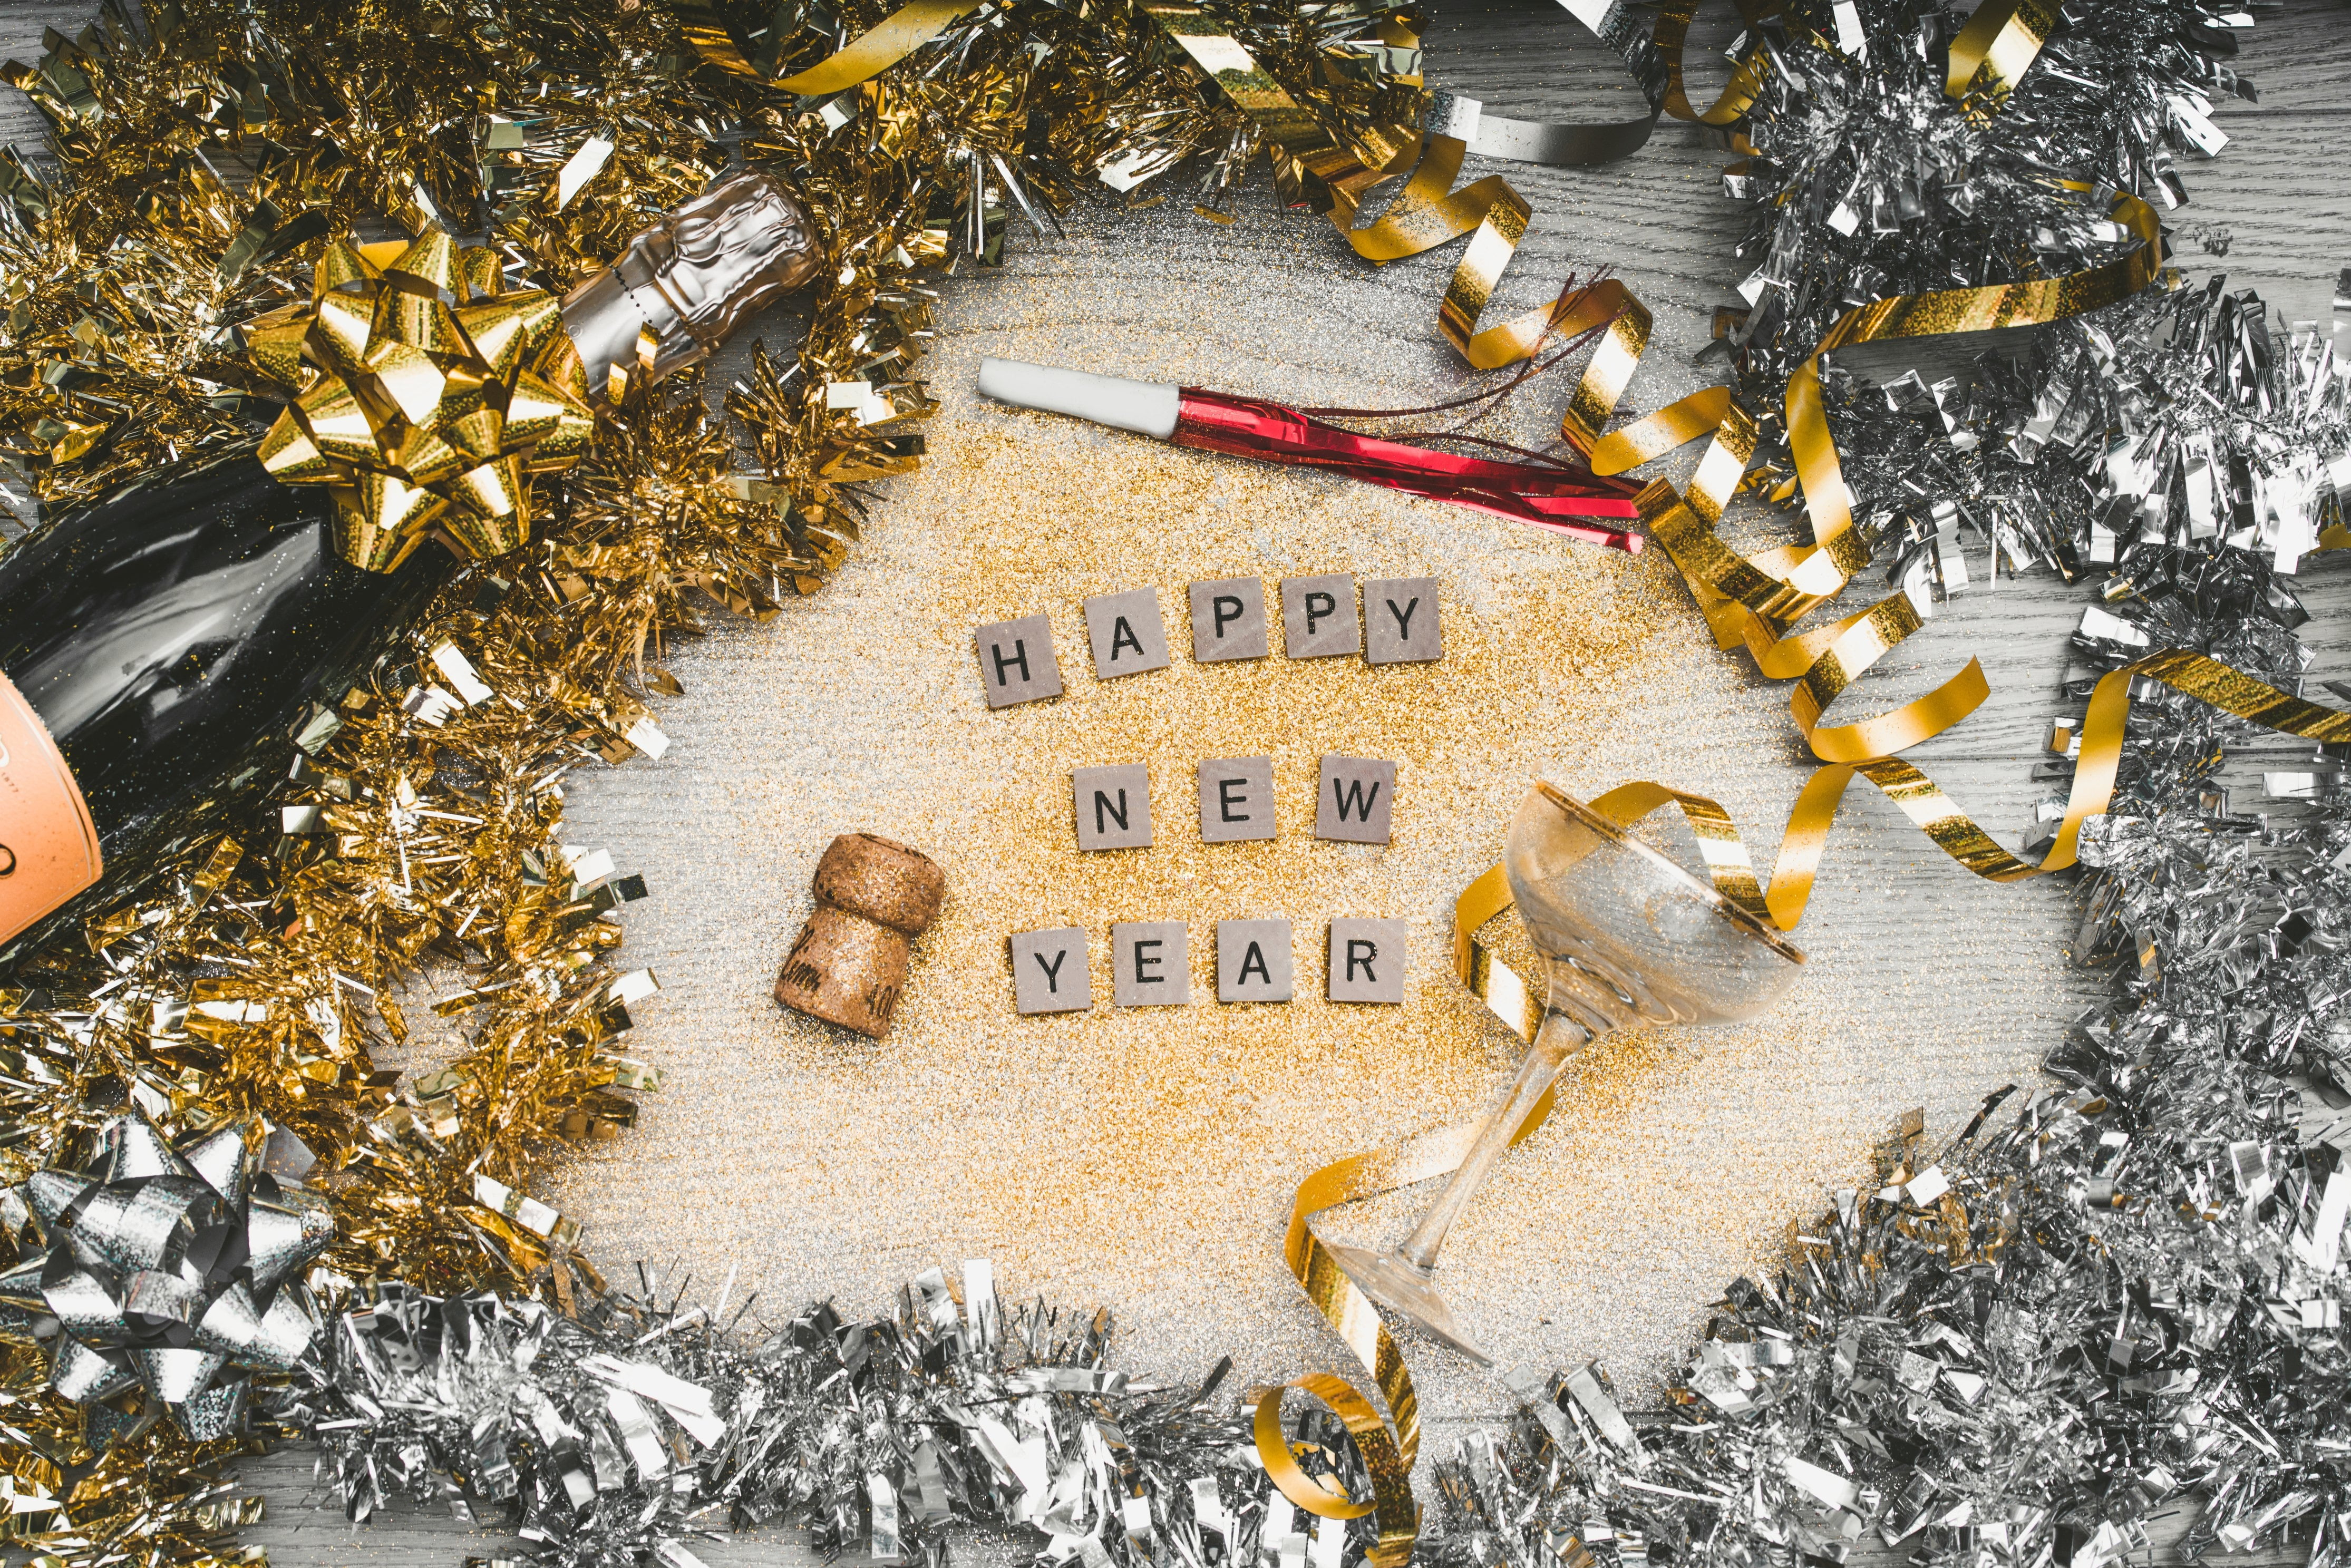 New year riches. Новый год (праздник). Шампанское новый год. Блестки новый год. Новый год шампанское елка.